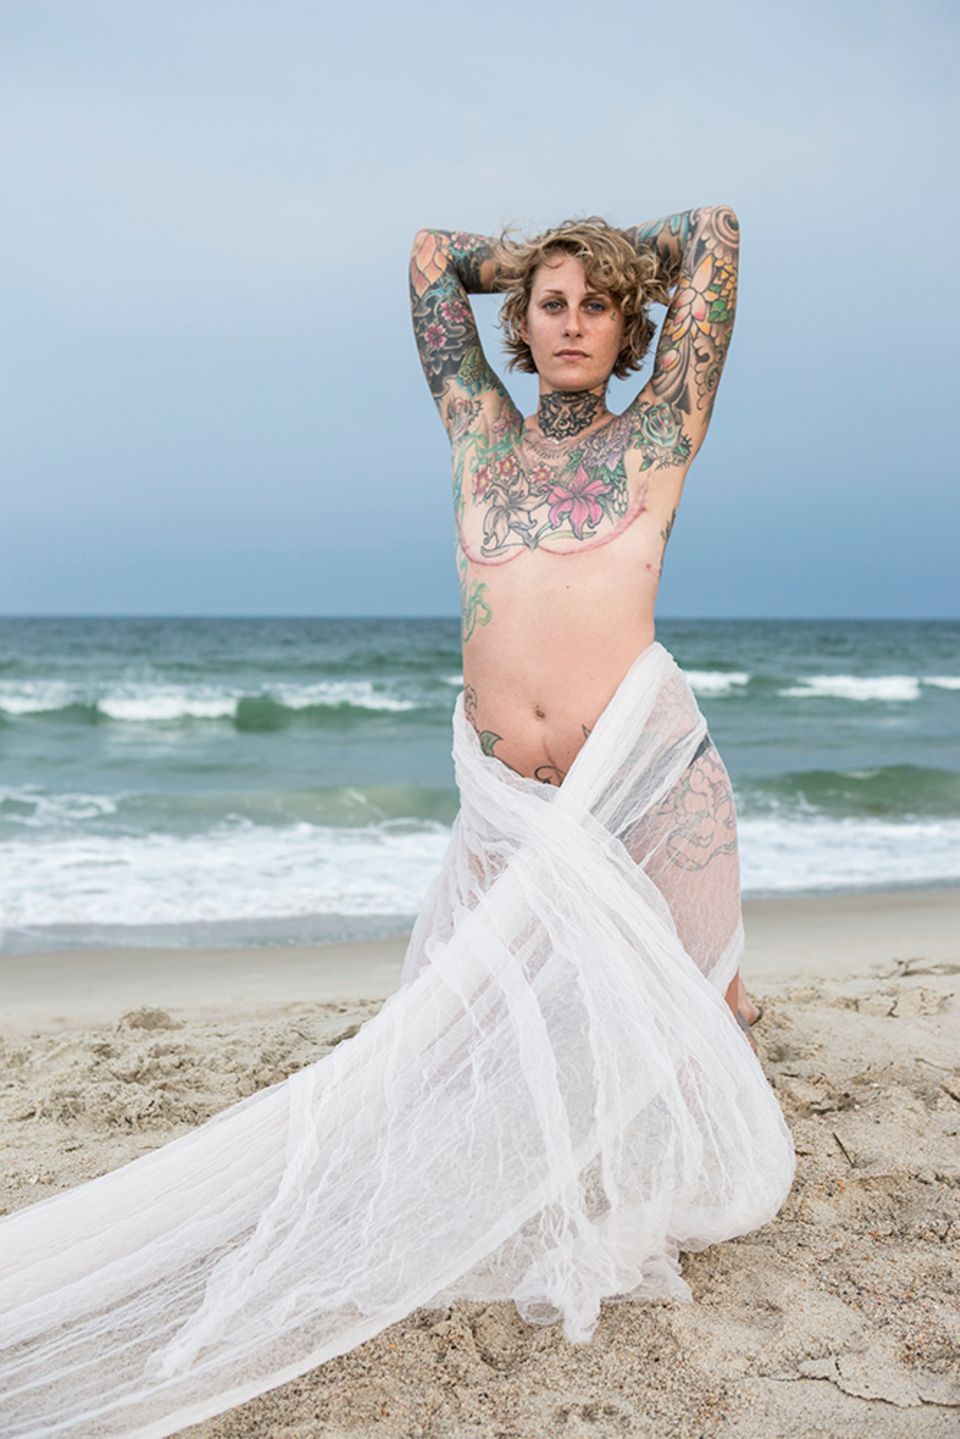 The Grace Project: Frau mit Tattoos am Strand